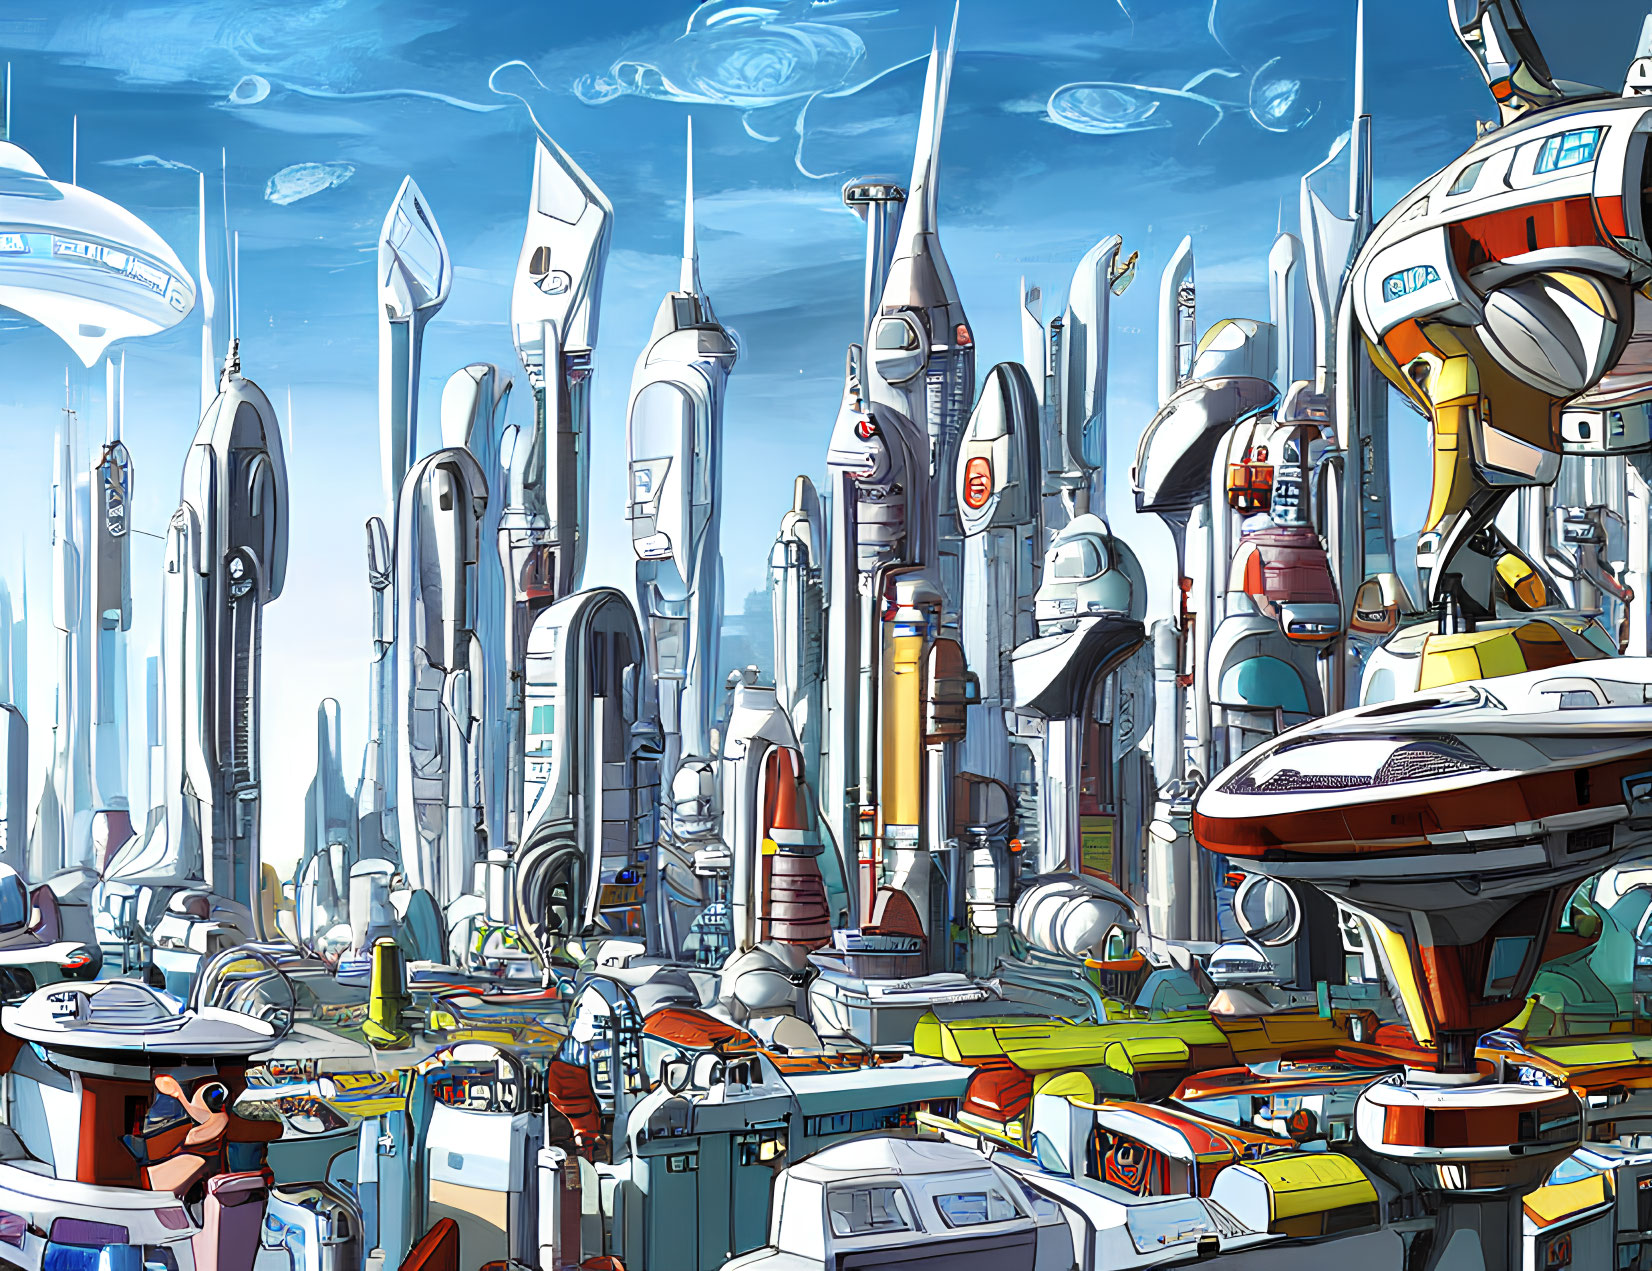 Futuristic cityscape with skyscrapers and advanced vehicles